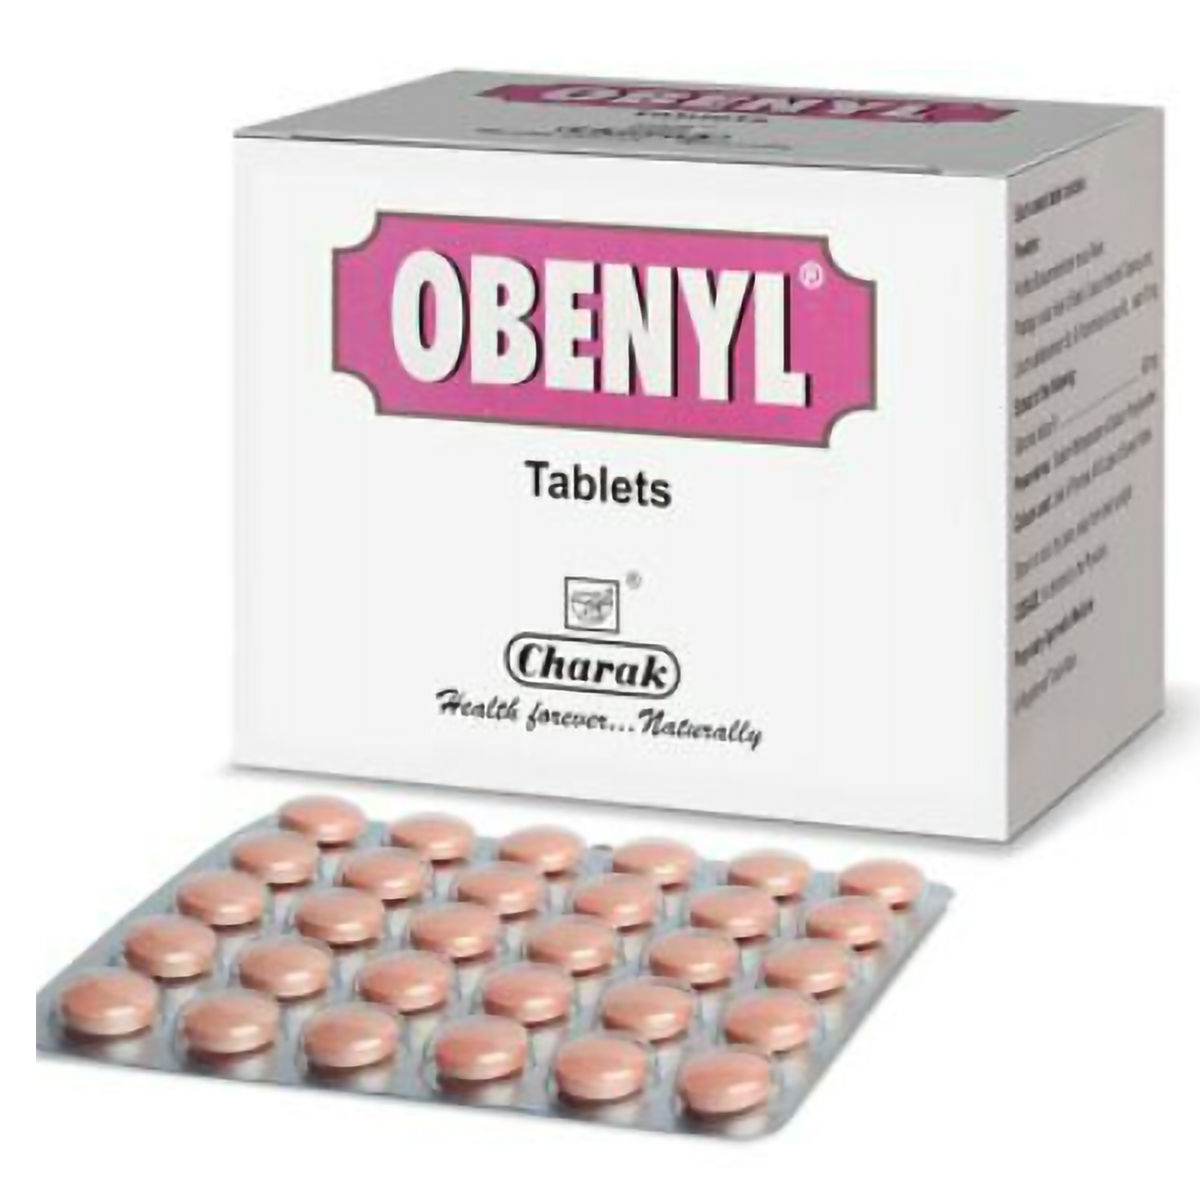 Buy Obenyl, 30 Tablets Online